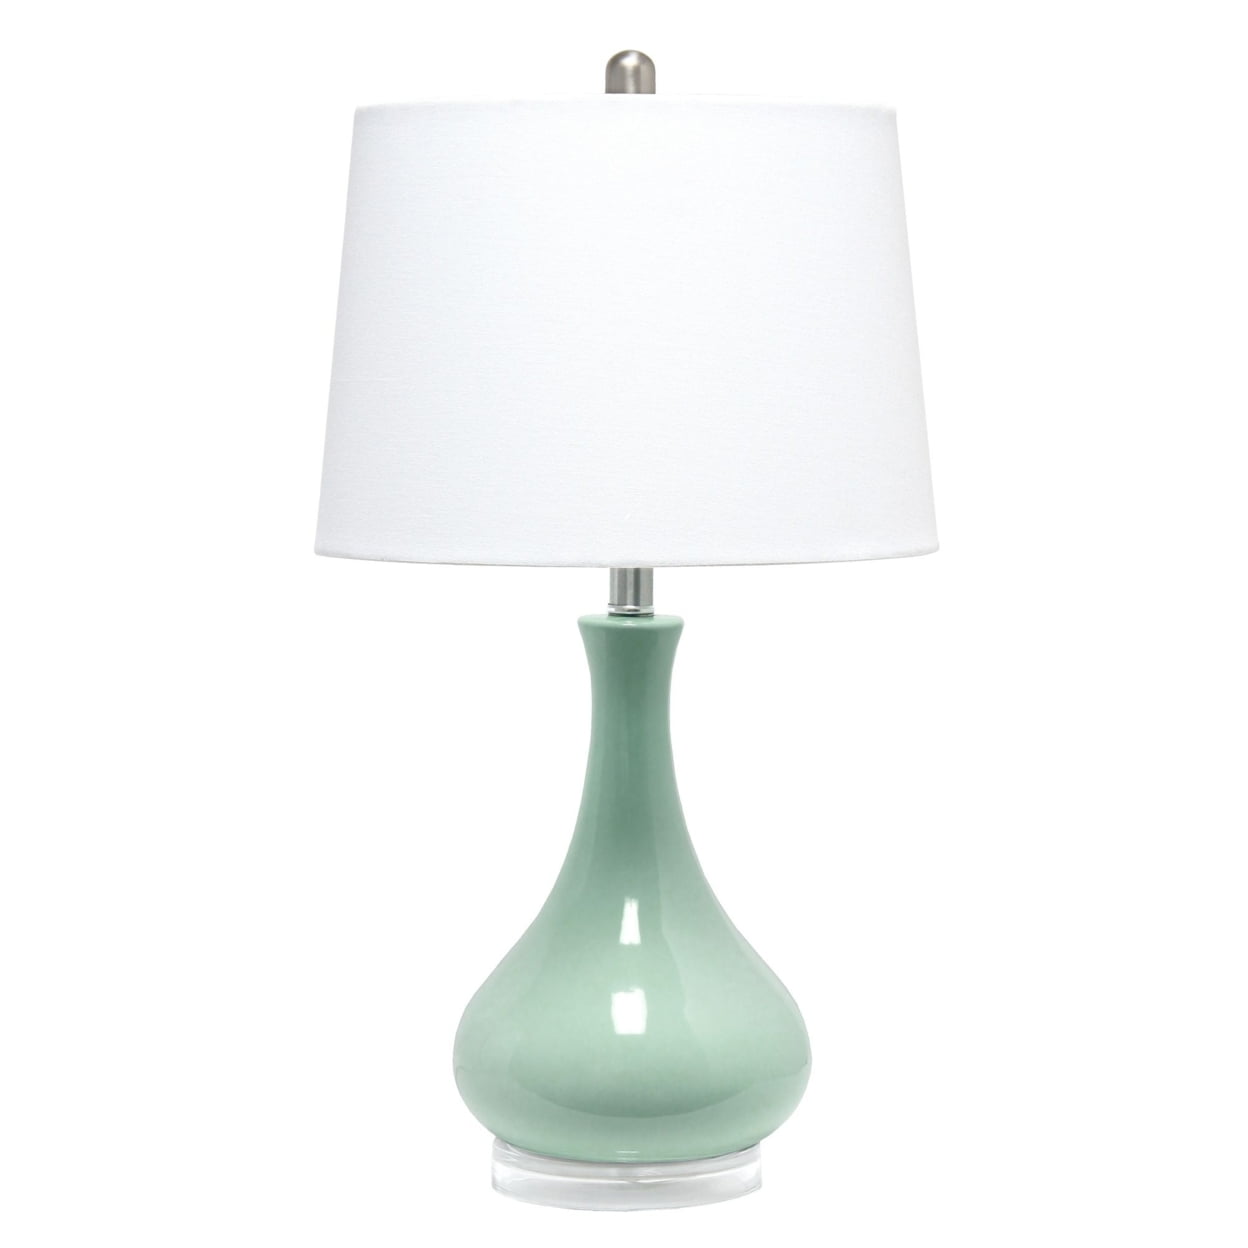 Lalia Home Droplet Table Lamp with Fabric Shade, Aqua